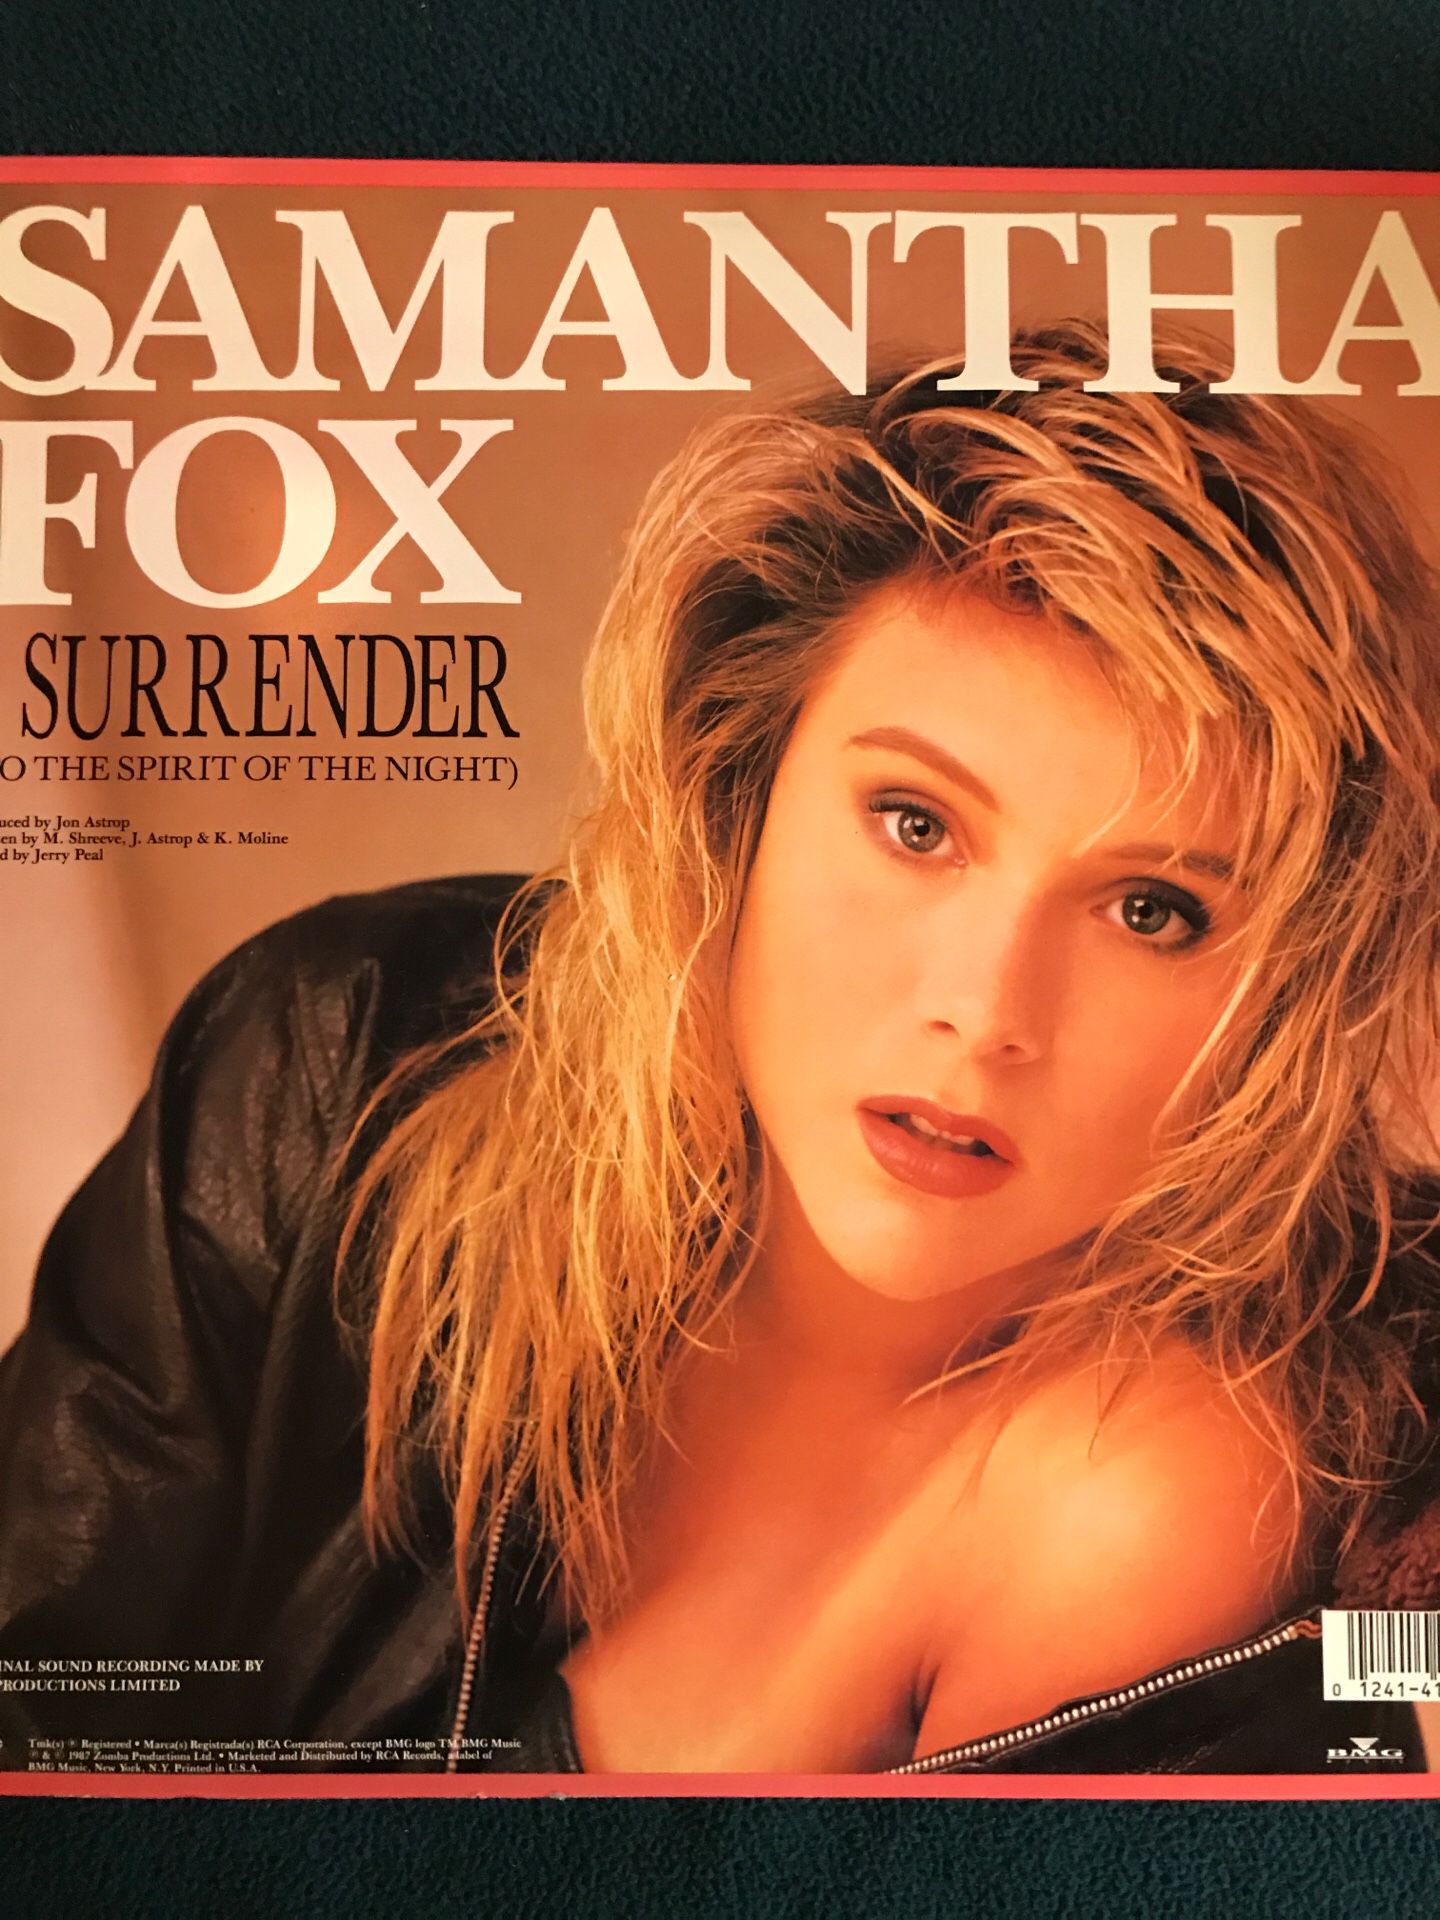 Samantha Fox Naughty Girls Need Love Too I Surrender 12” 33 Rpm Single Vinyl Record 1987 Vg